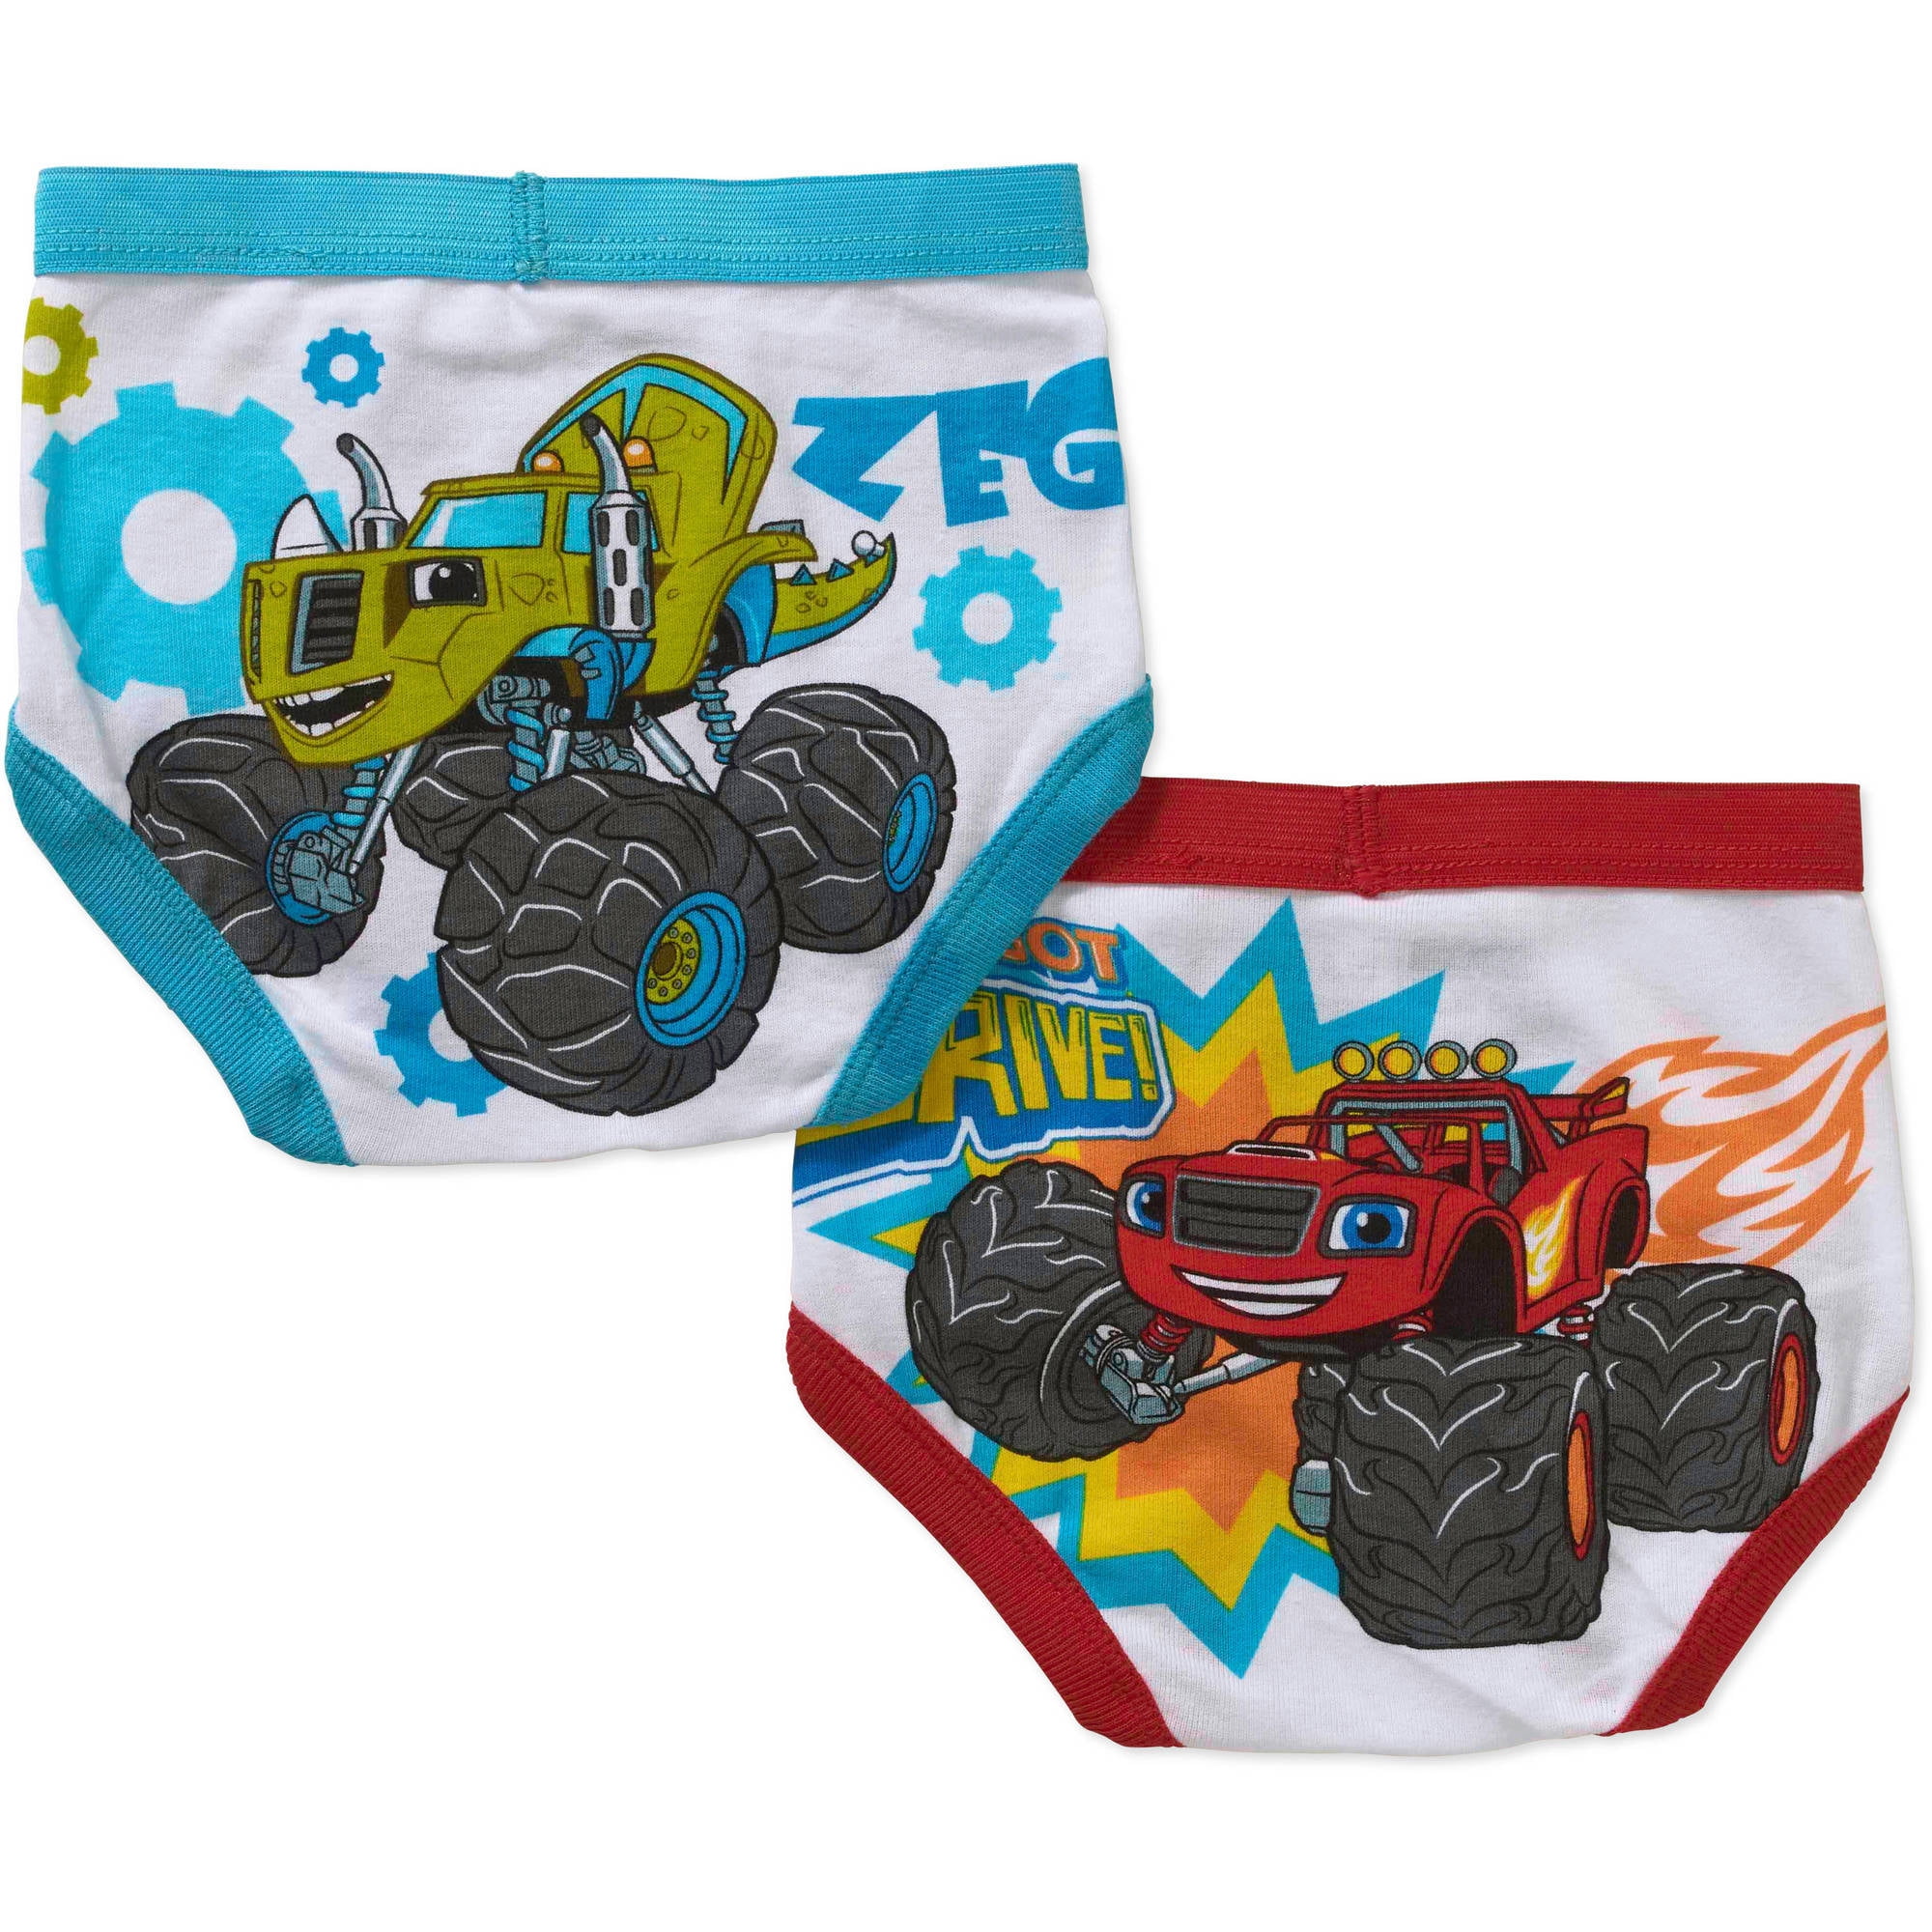 Nickelodeon Blaze and the Monster Machines Underwear, 3-Pack 100